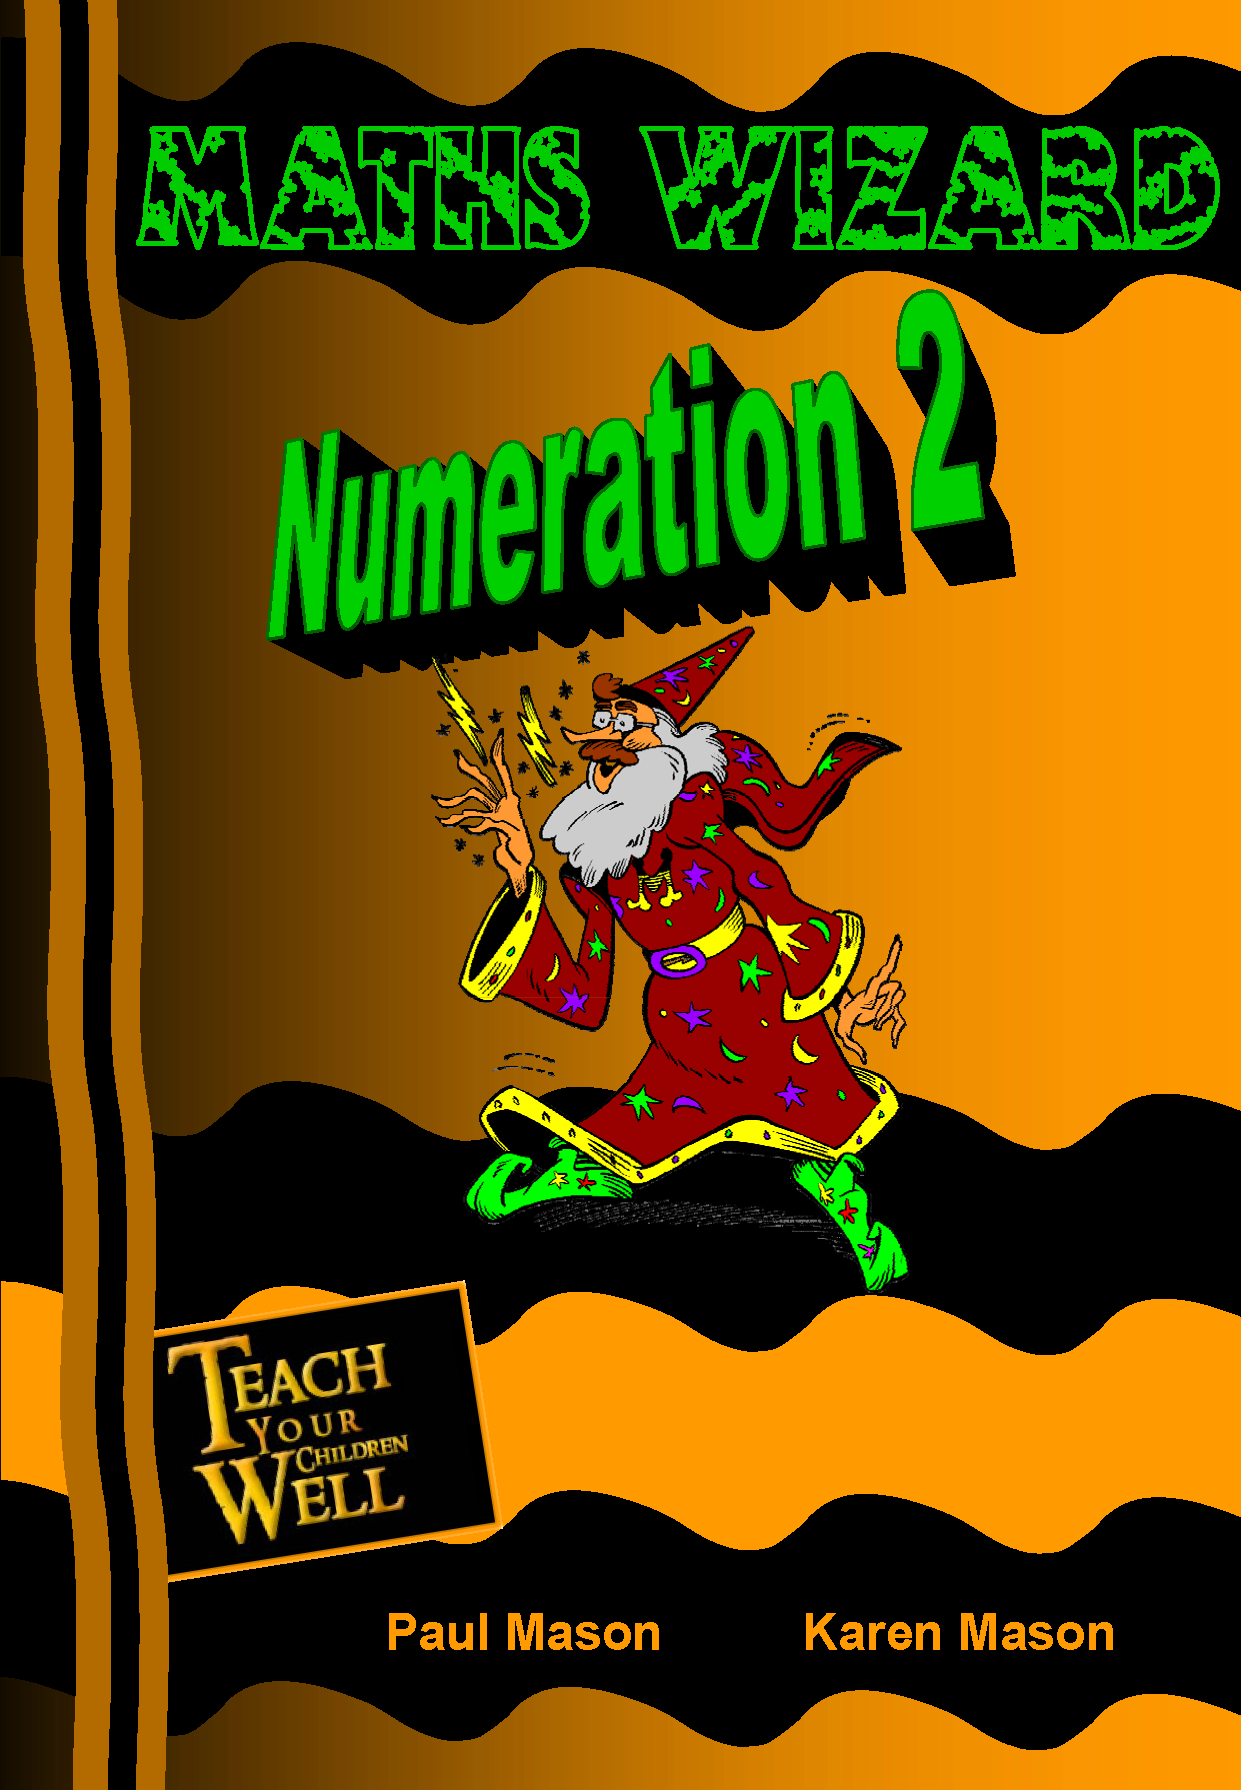 Numeration 2